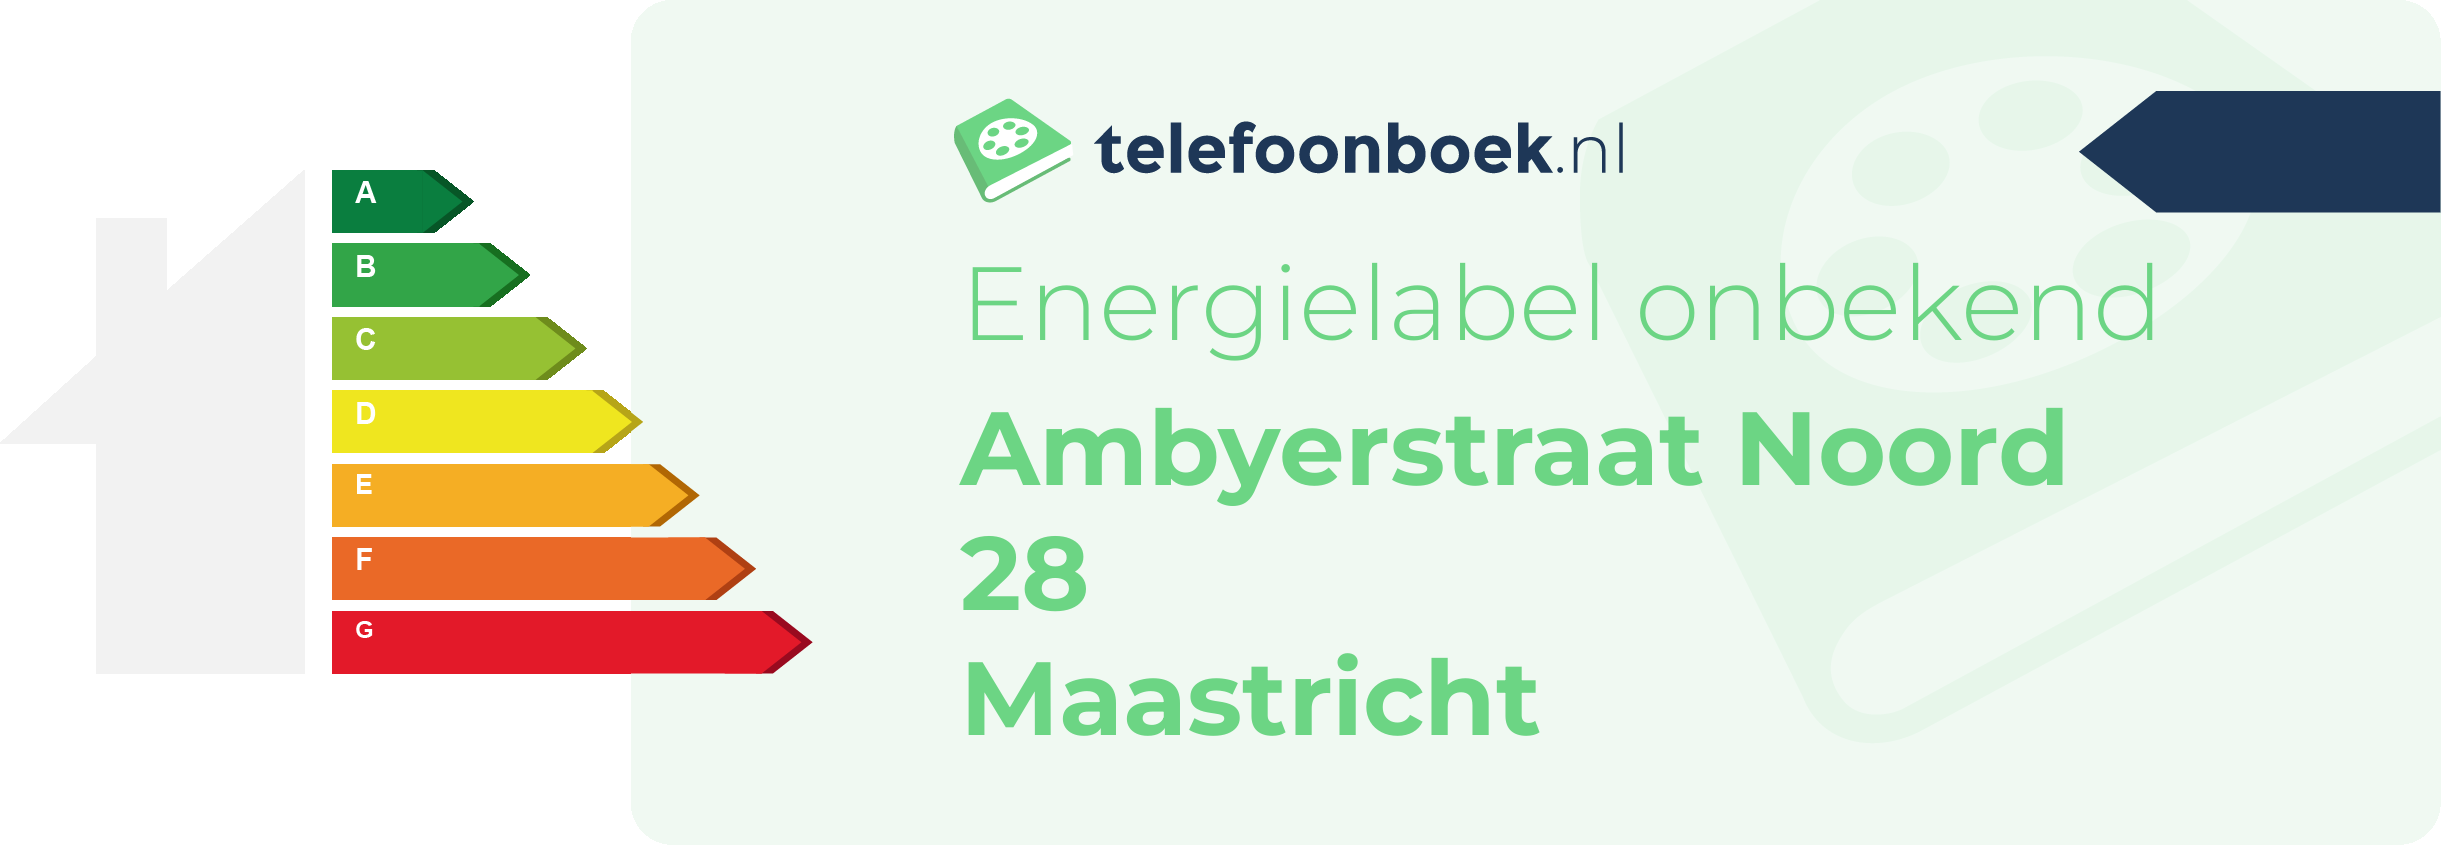 Energielabel Ambyerstraat Noord 28 Maastricht